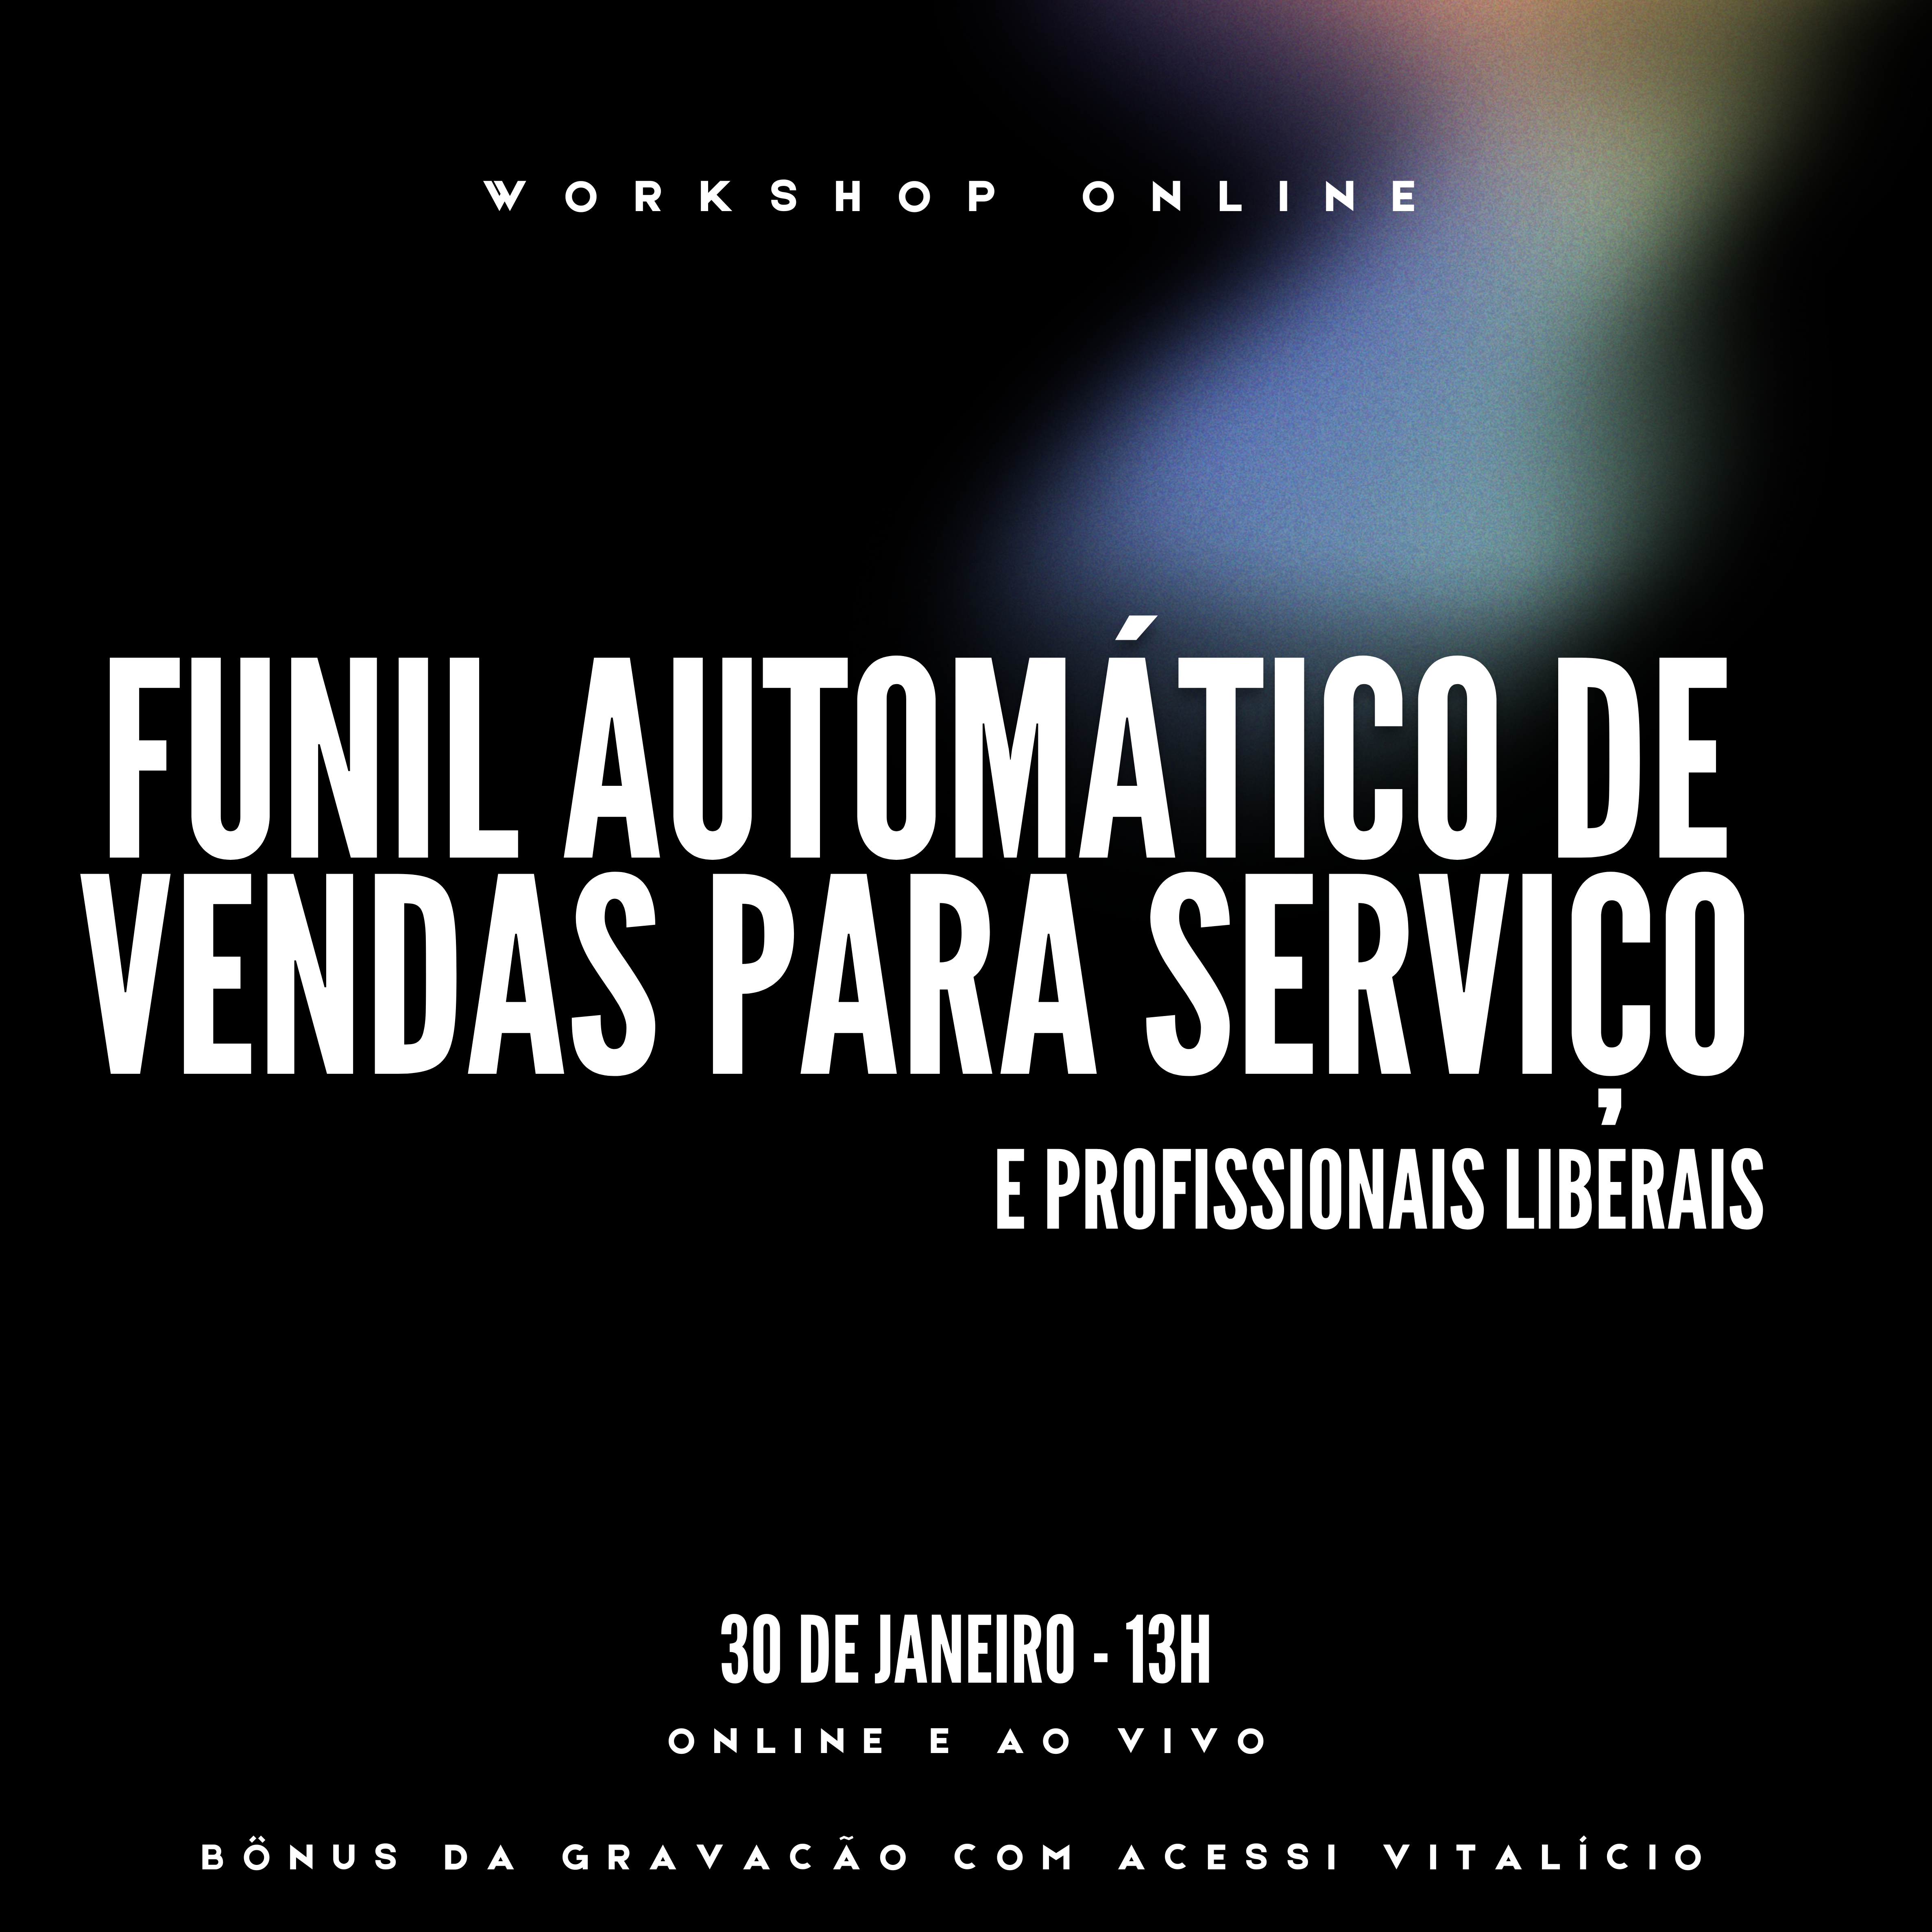 Workshop Online: Funil automático de vendas para serviço 53